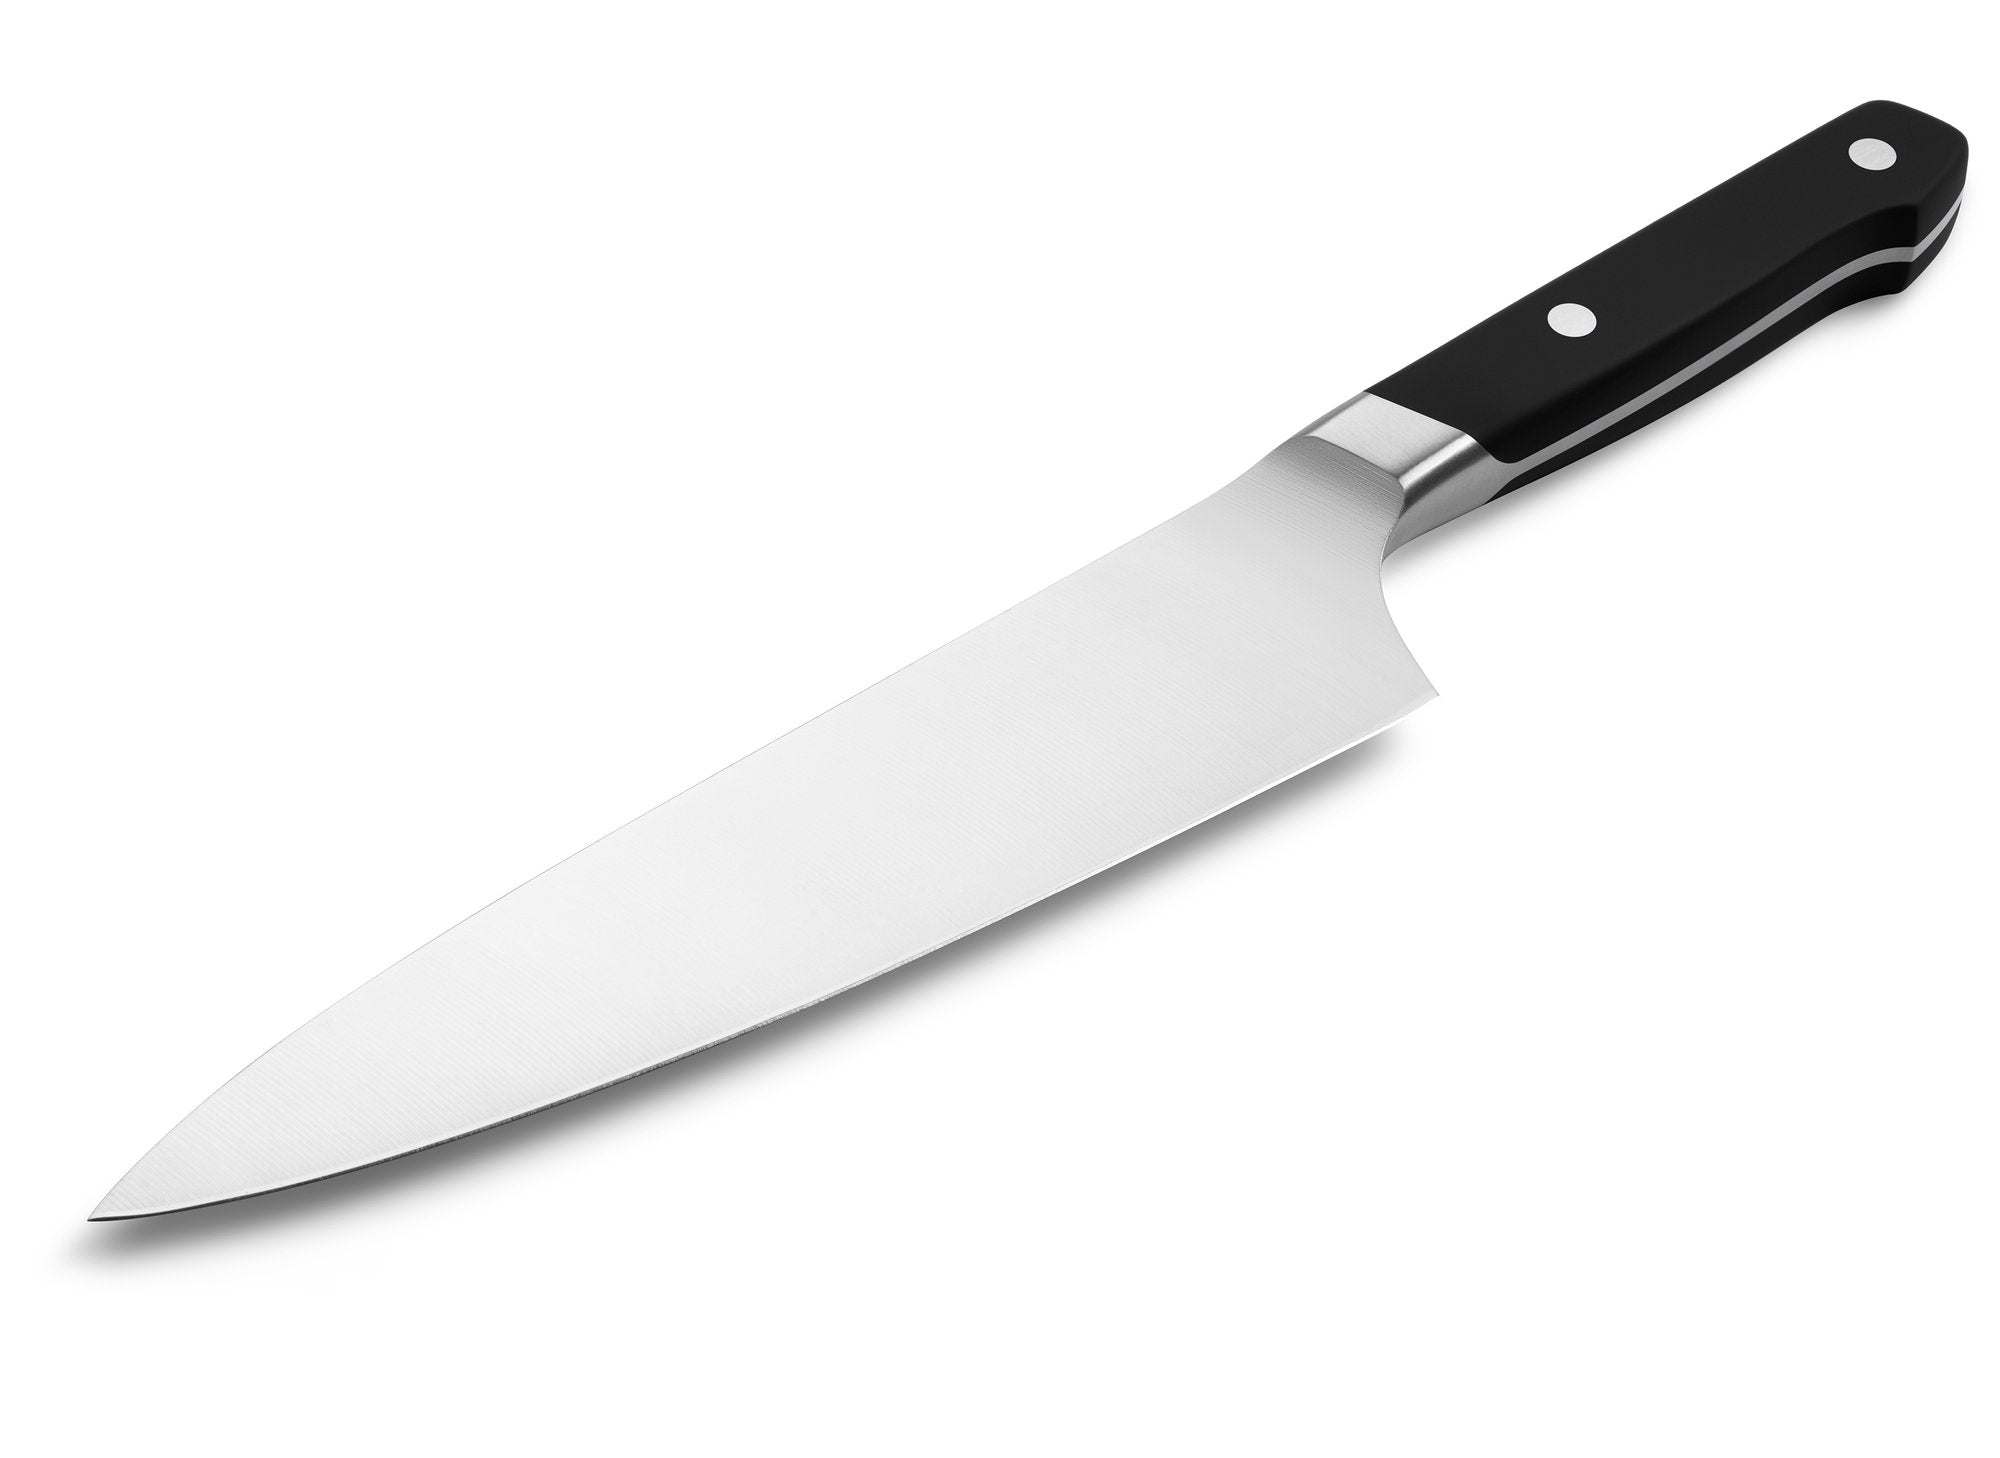 How to cut asparagus: a chef's knife